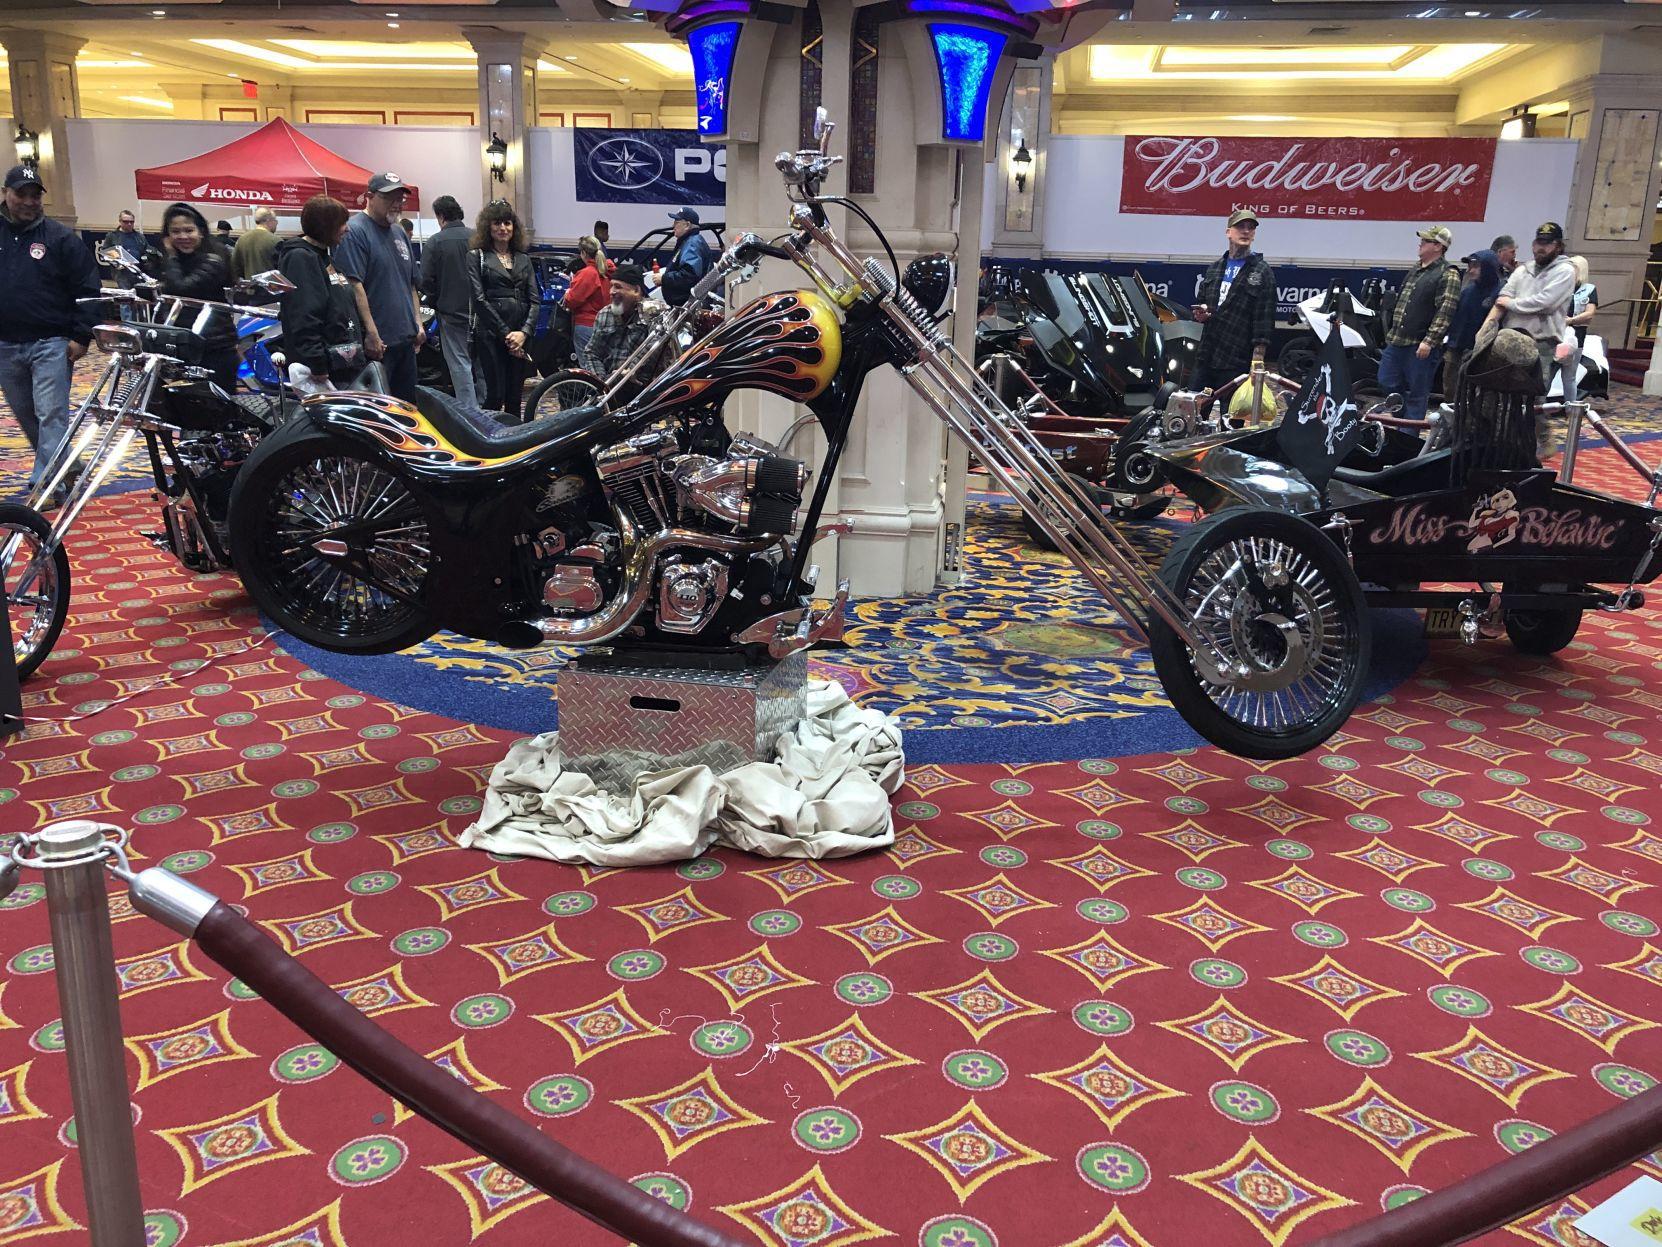 GALLERY International Motorcycle Show at Showboat Atlantic City